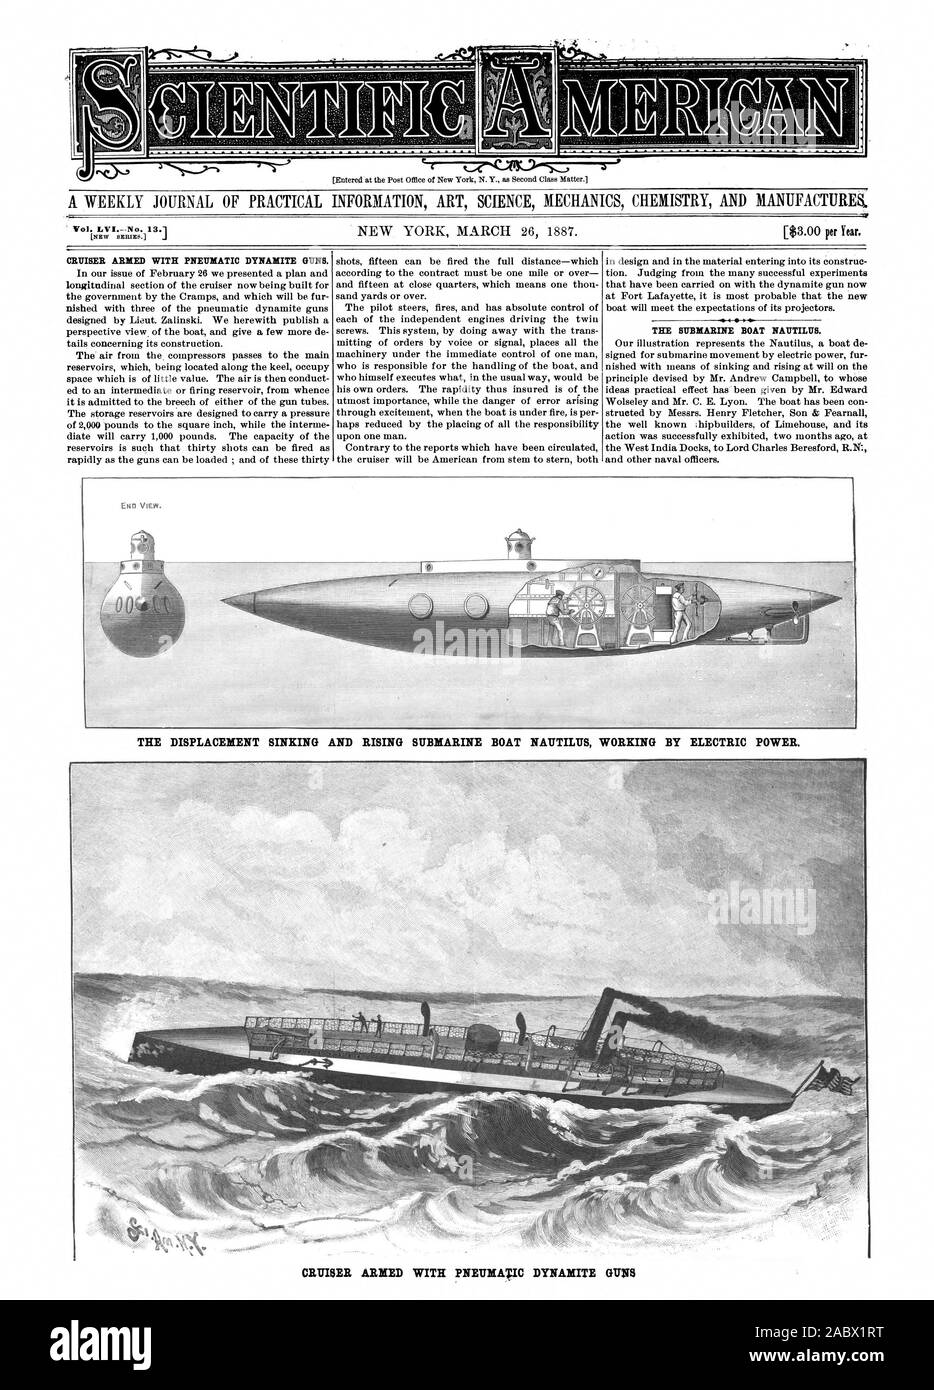 CRUISER ARMED WITH PNEUMATIC DYNAMITE GUNS. THE SUBMARINE BOAT NAUTILUS. CRUISER ARMED WITH PNEUMATIC DYNAMITE GUNS THE DISPLACEMENT SINKING AND RISING SUBMARINE BOAT NAUTILUS WORKING BY ELECTRIC POWER. Vol. LVI.--No. 13.1, scientific american, 1887-03-26 Stock Photo